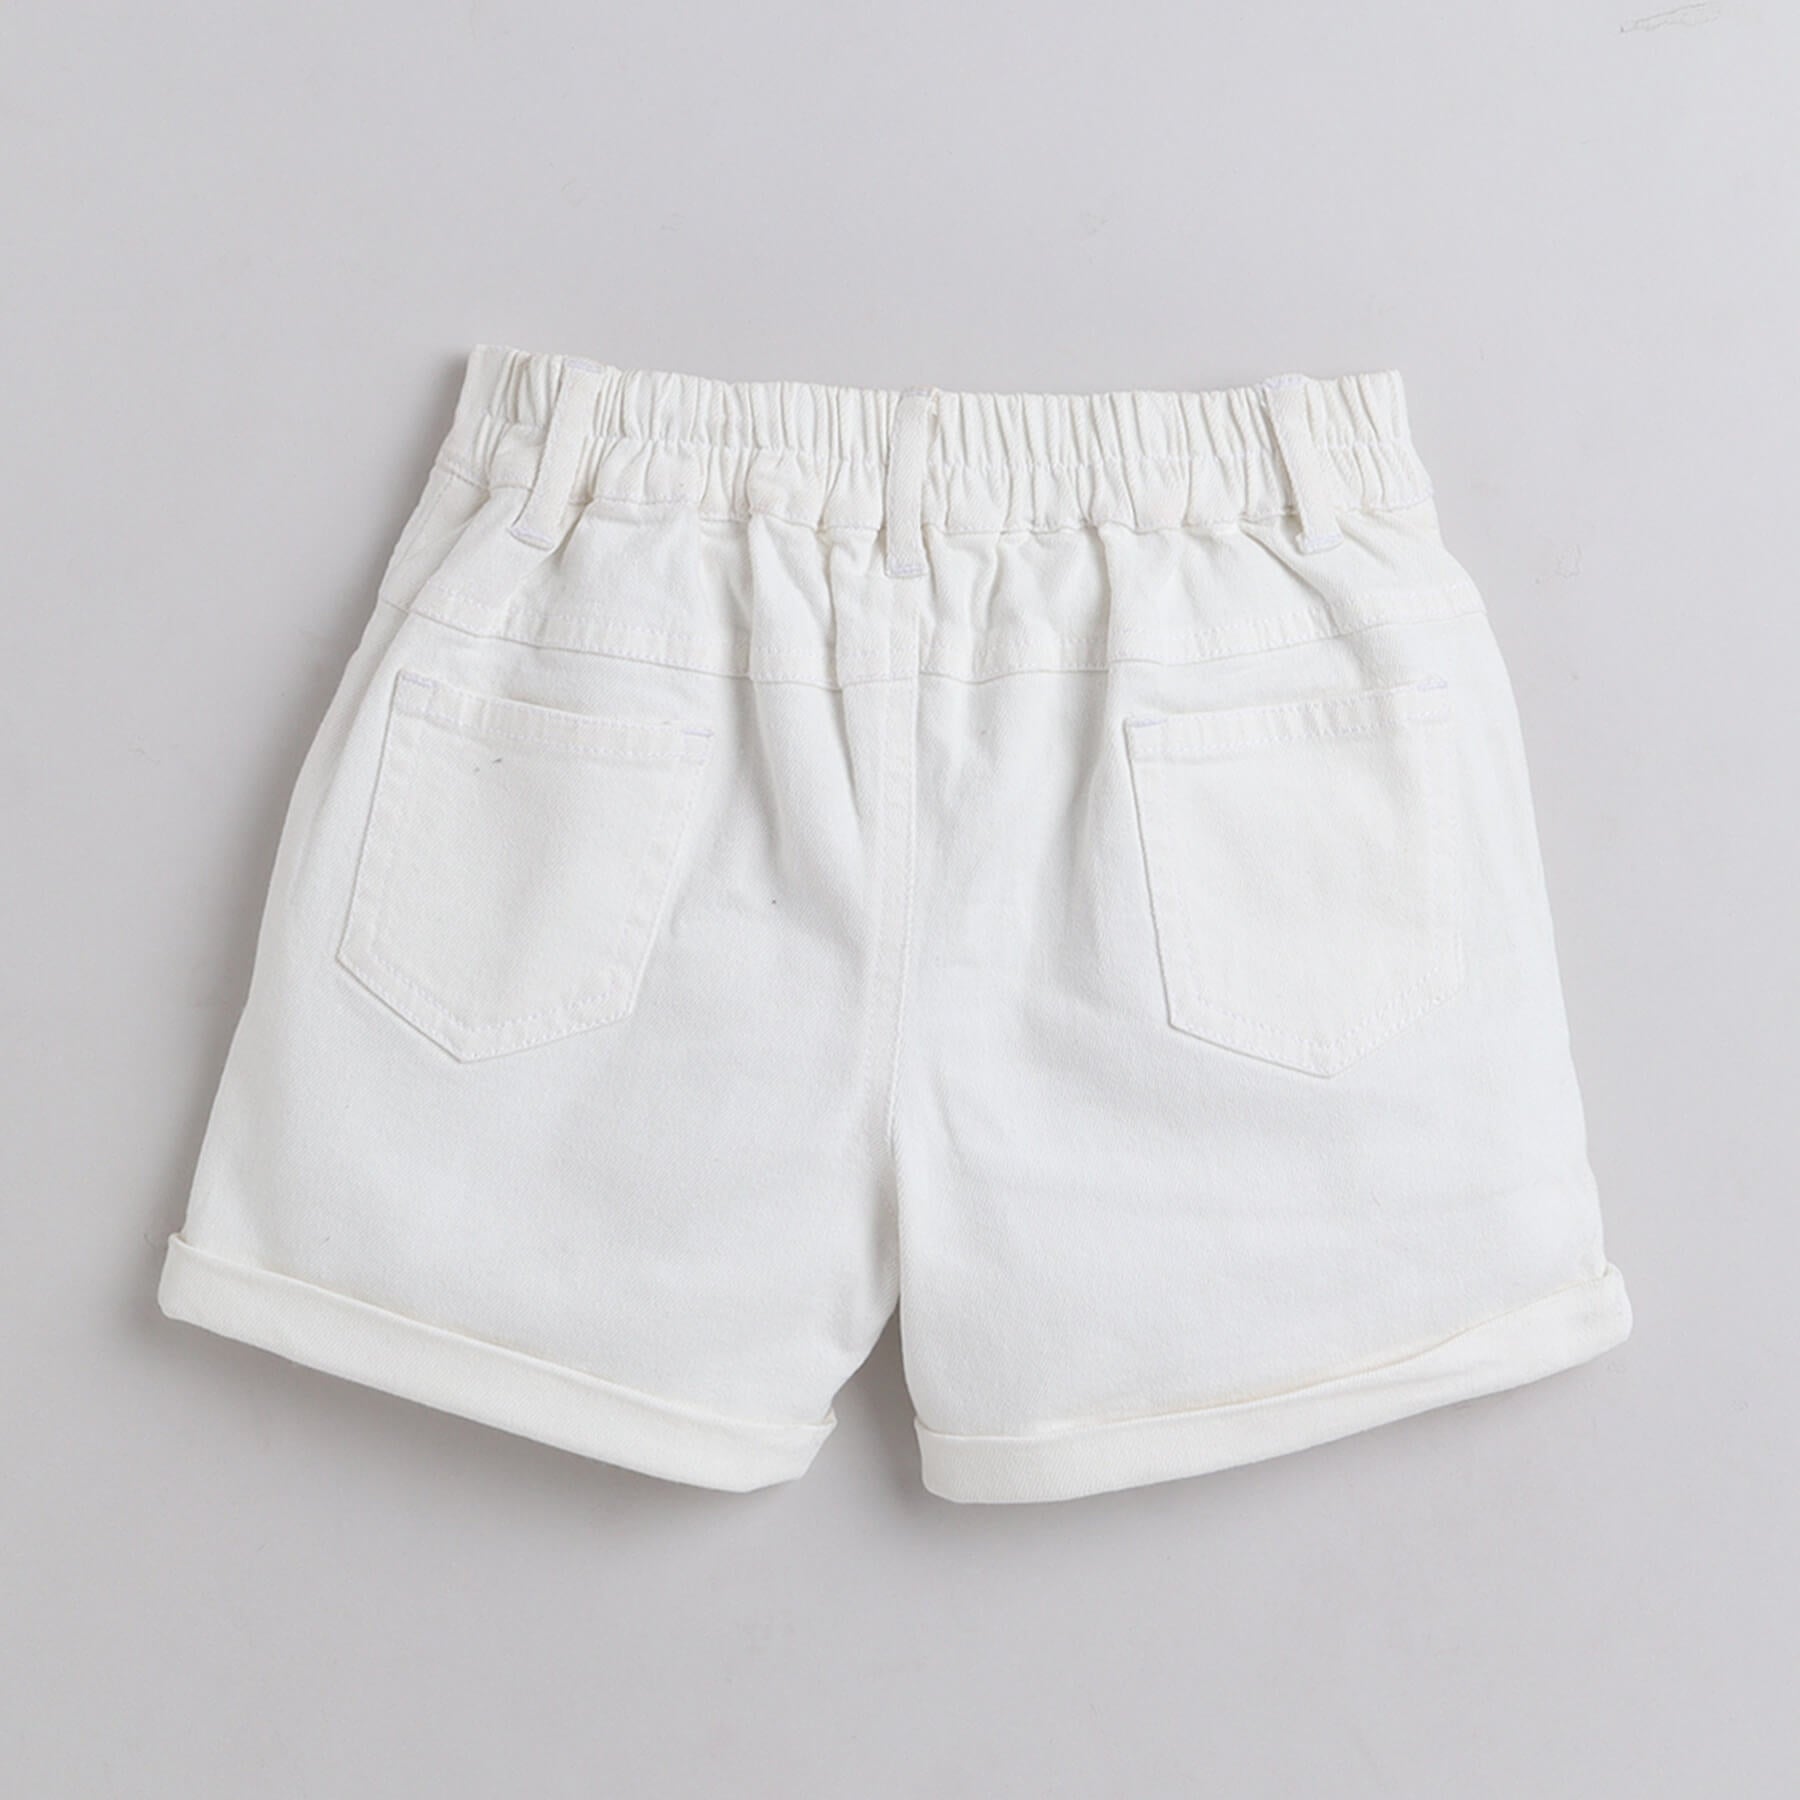 white cotton lycra shorts